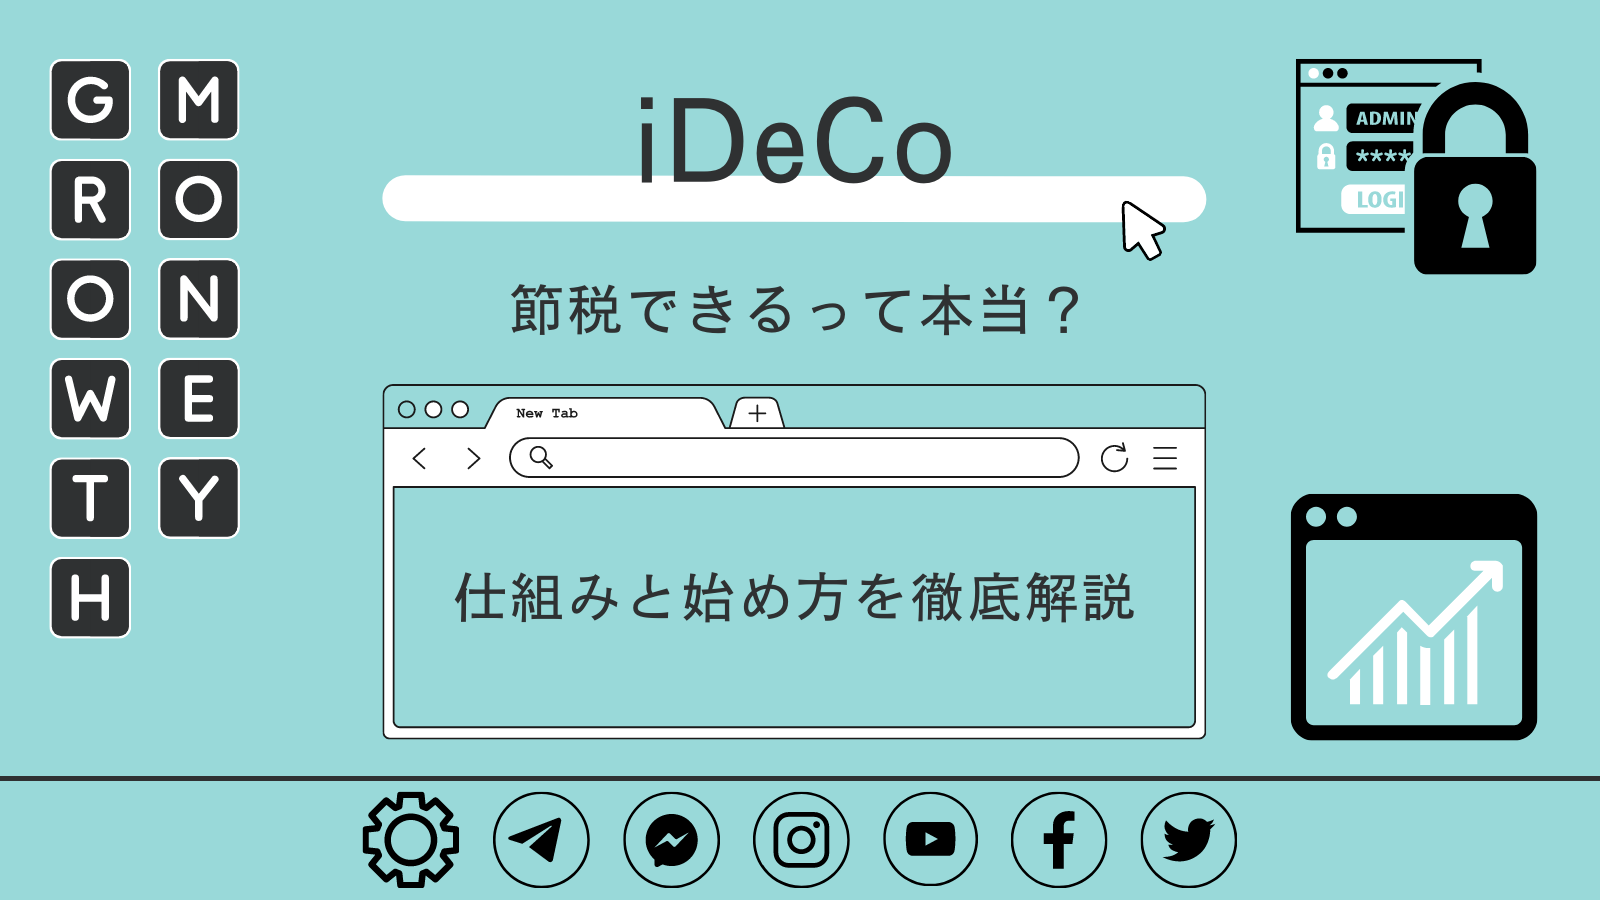 iDeCo(イデコ)で節税